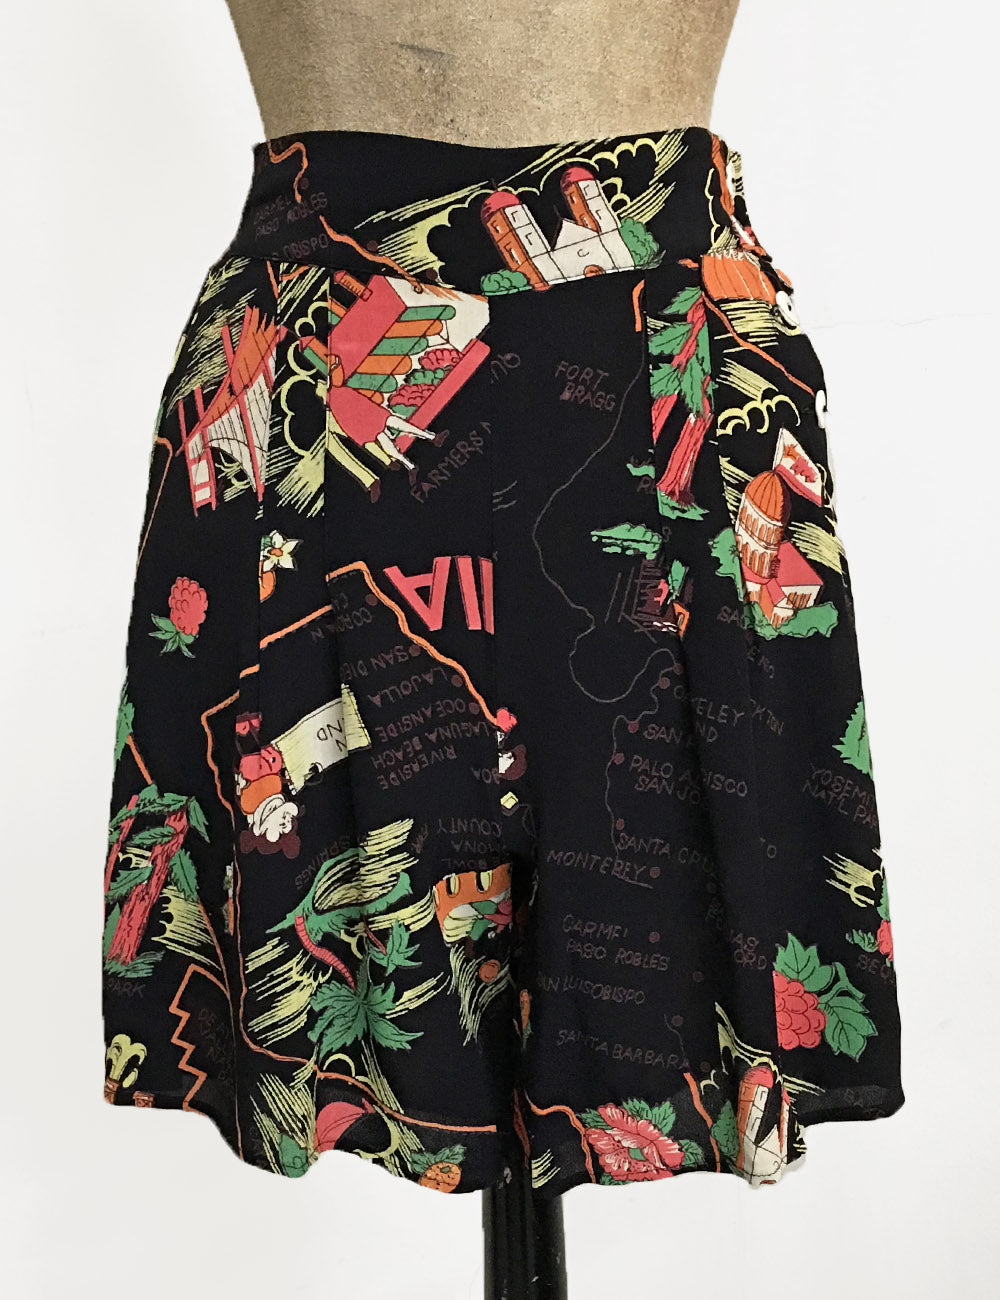 Black California Map Print High Waisted Vintage Inspired Shorts